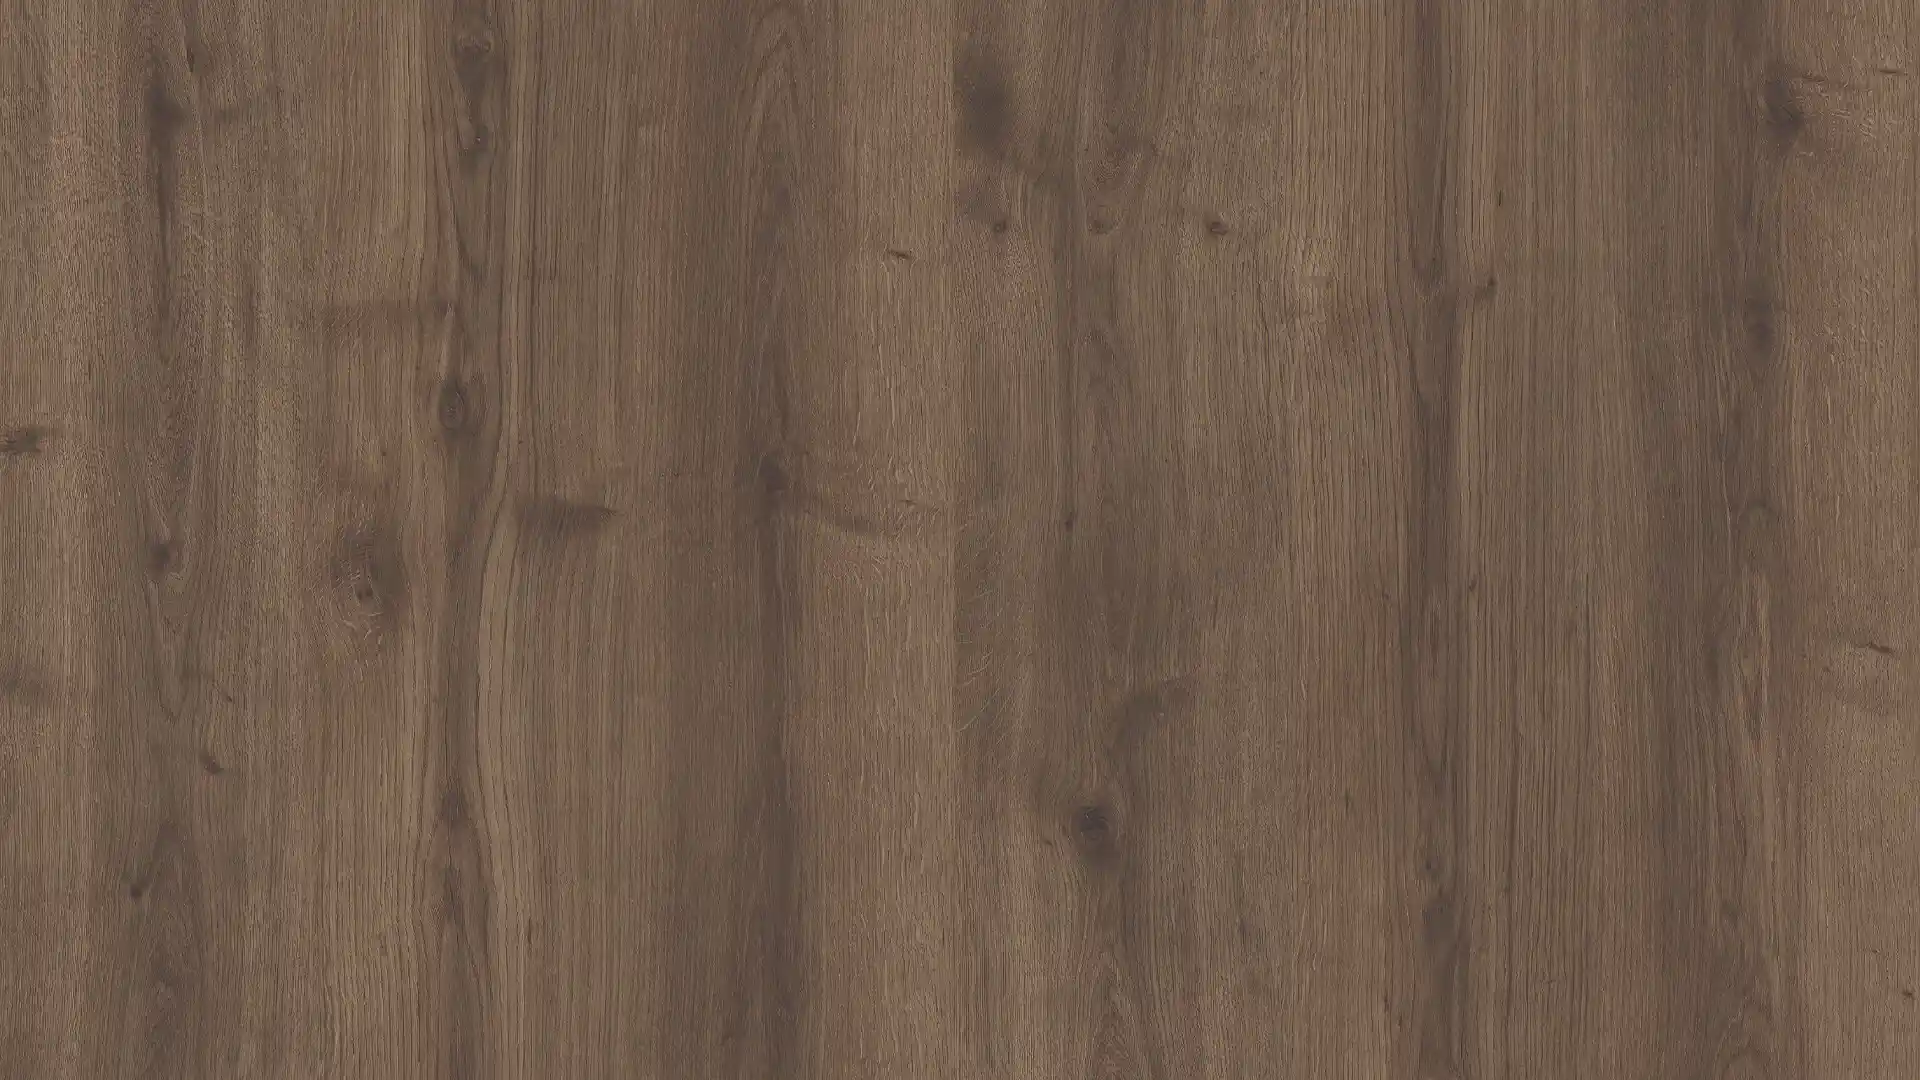 Hardwood flooring swatch